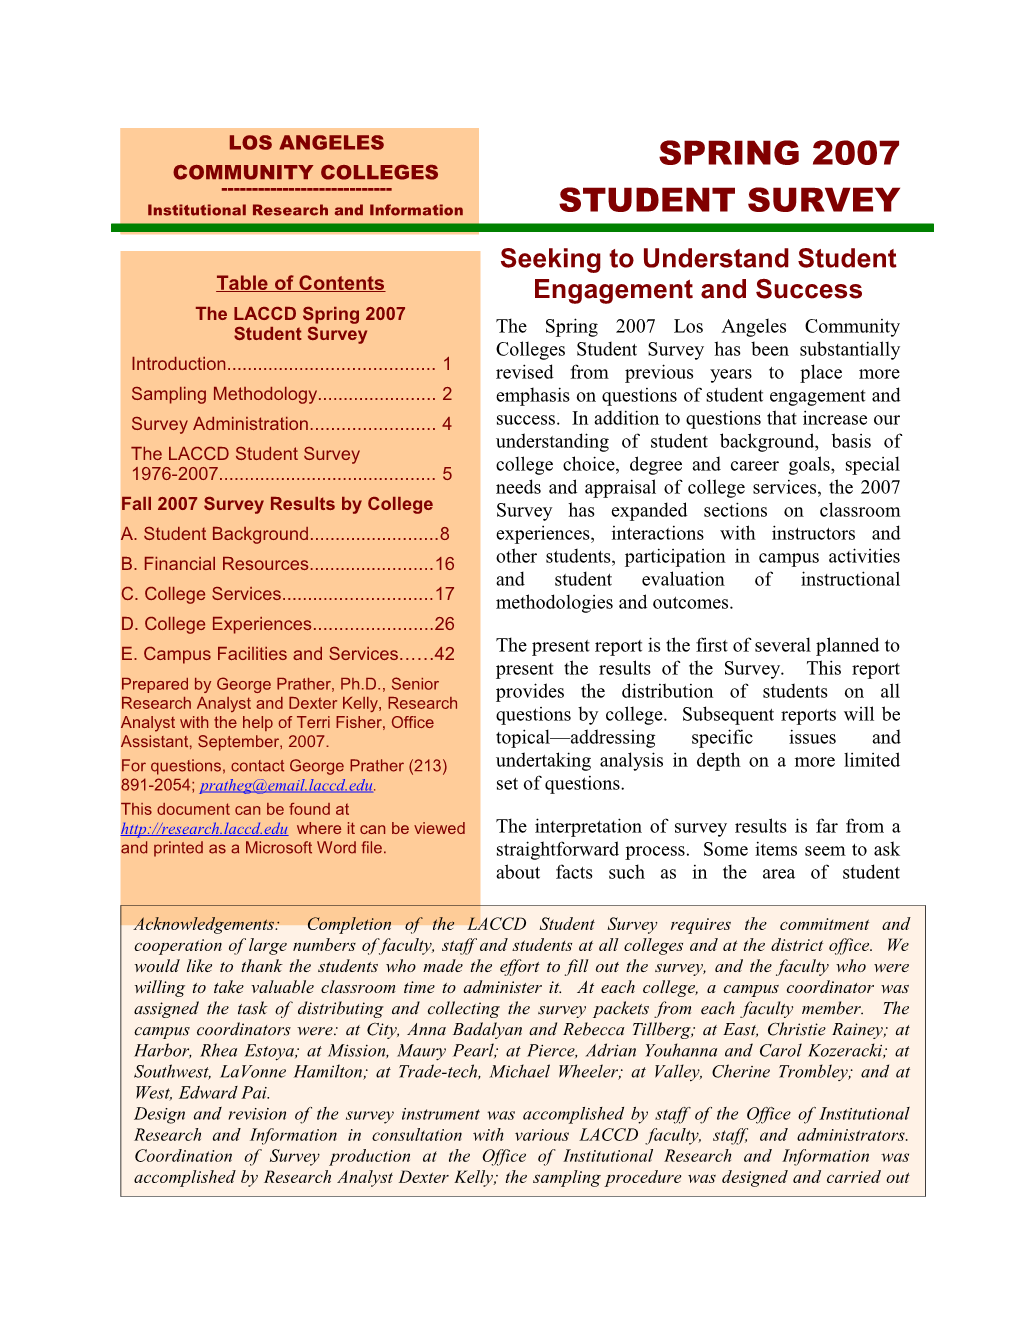 Spring 2007 Student Survey